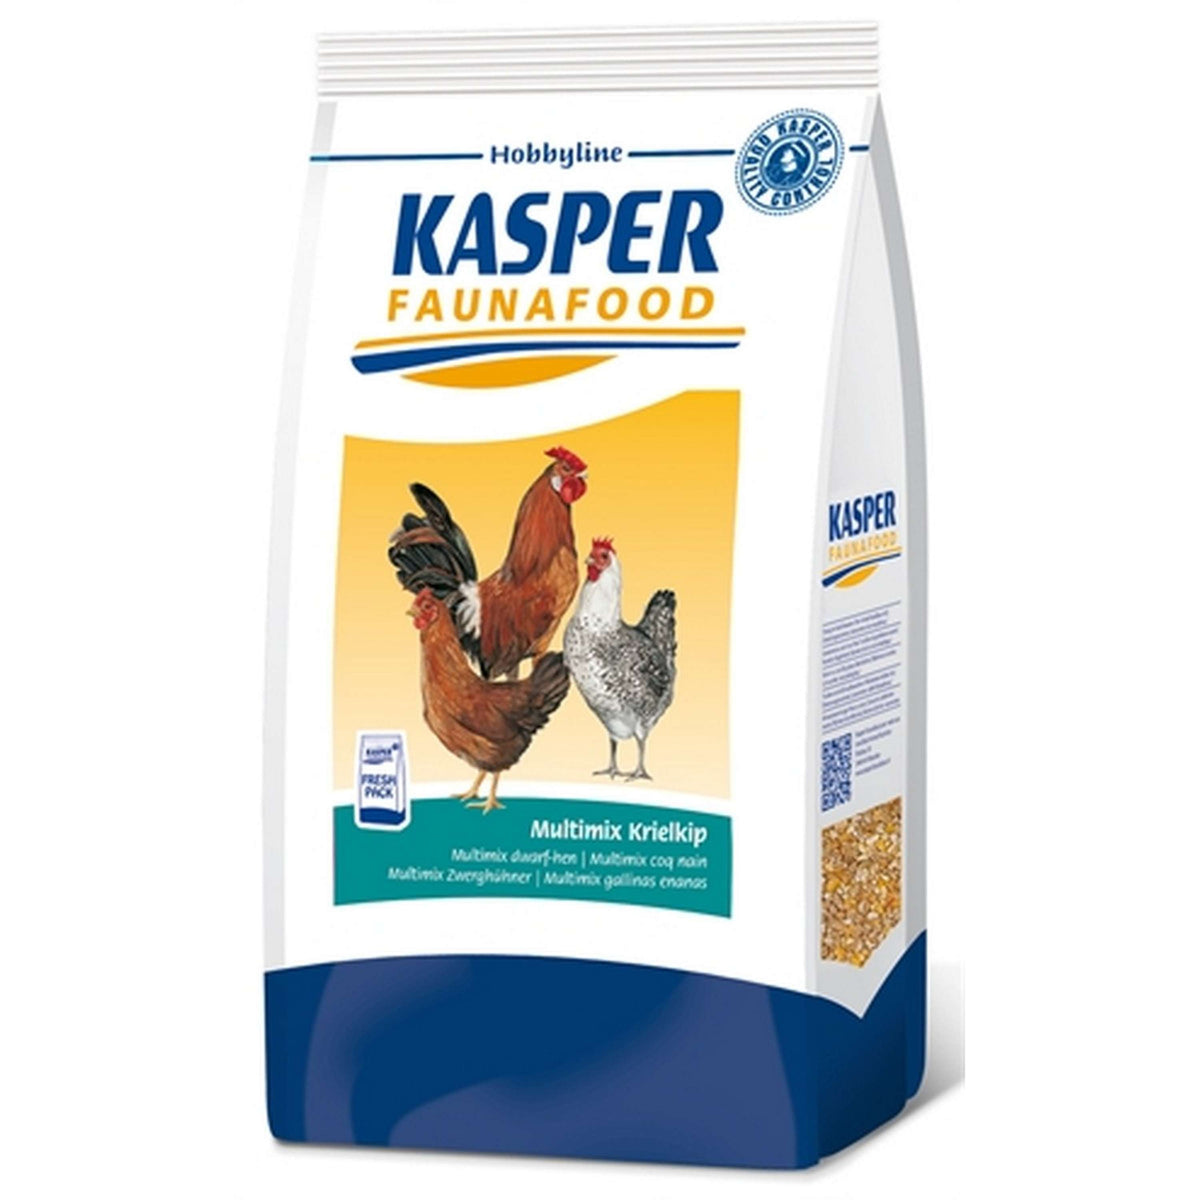 Kasper Fauna Food Multimix Zwerghuhn Hobbyline